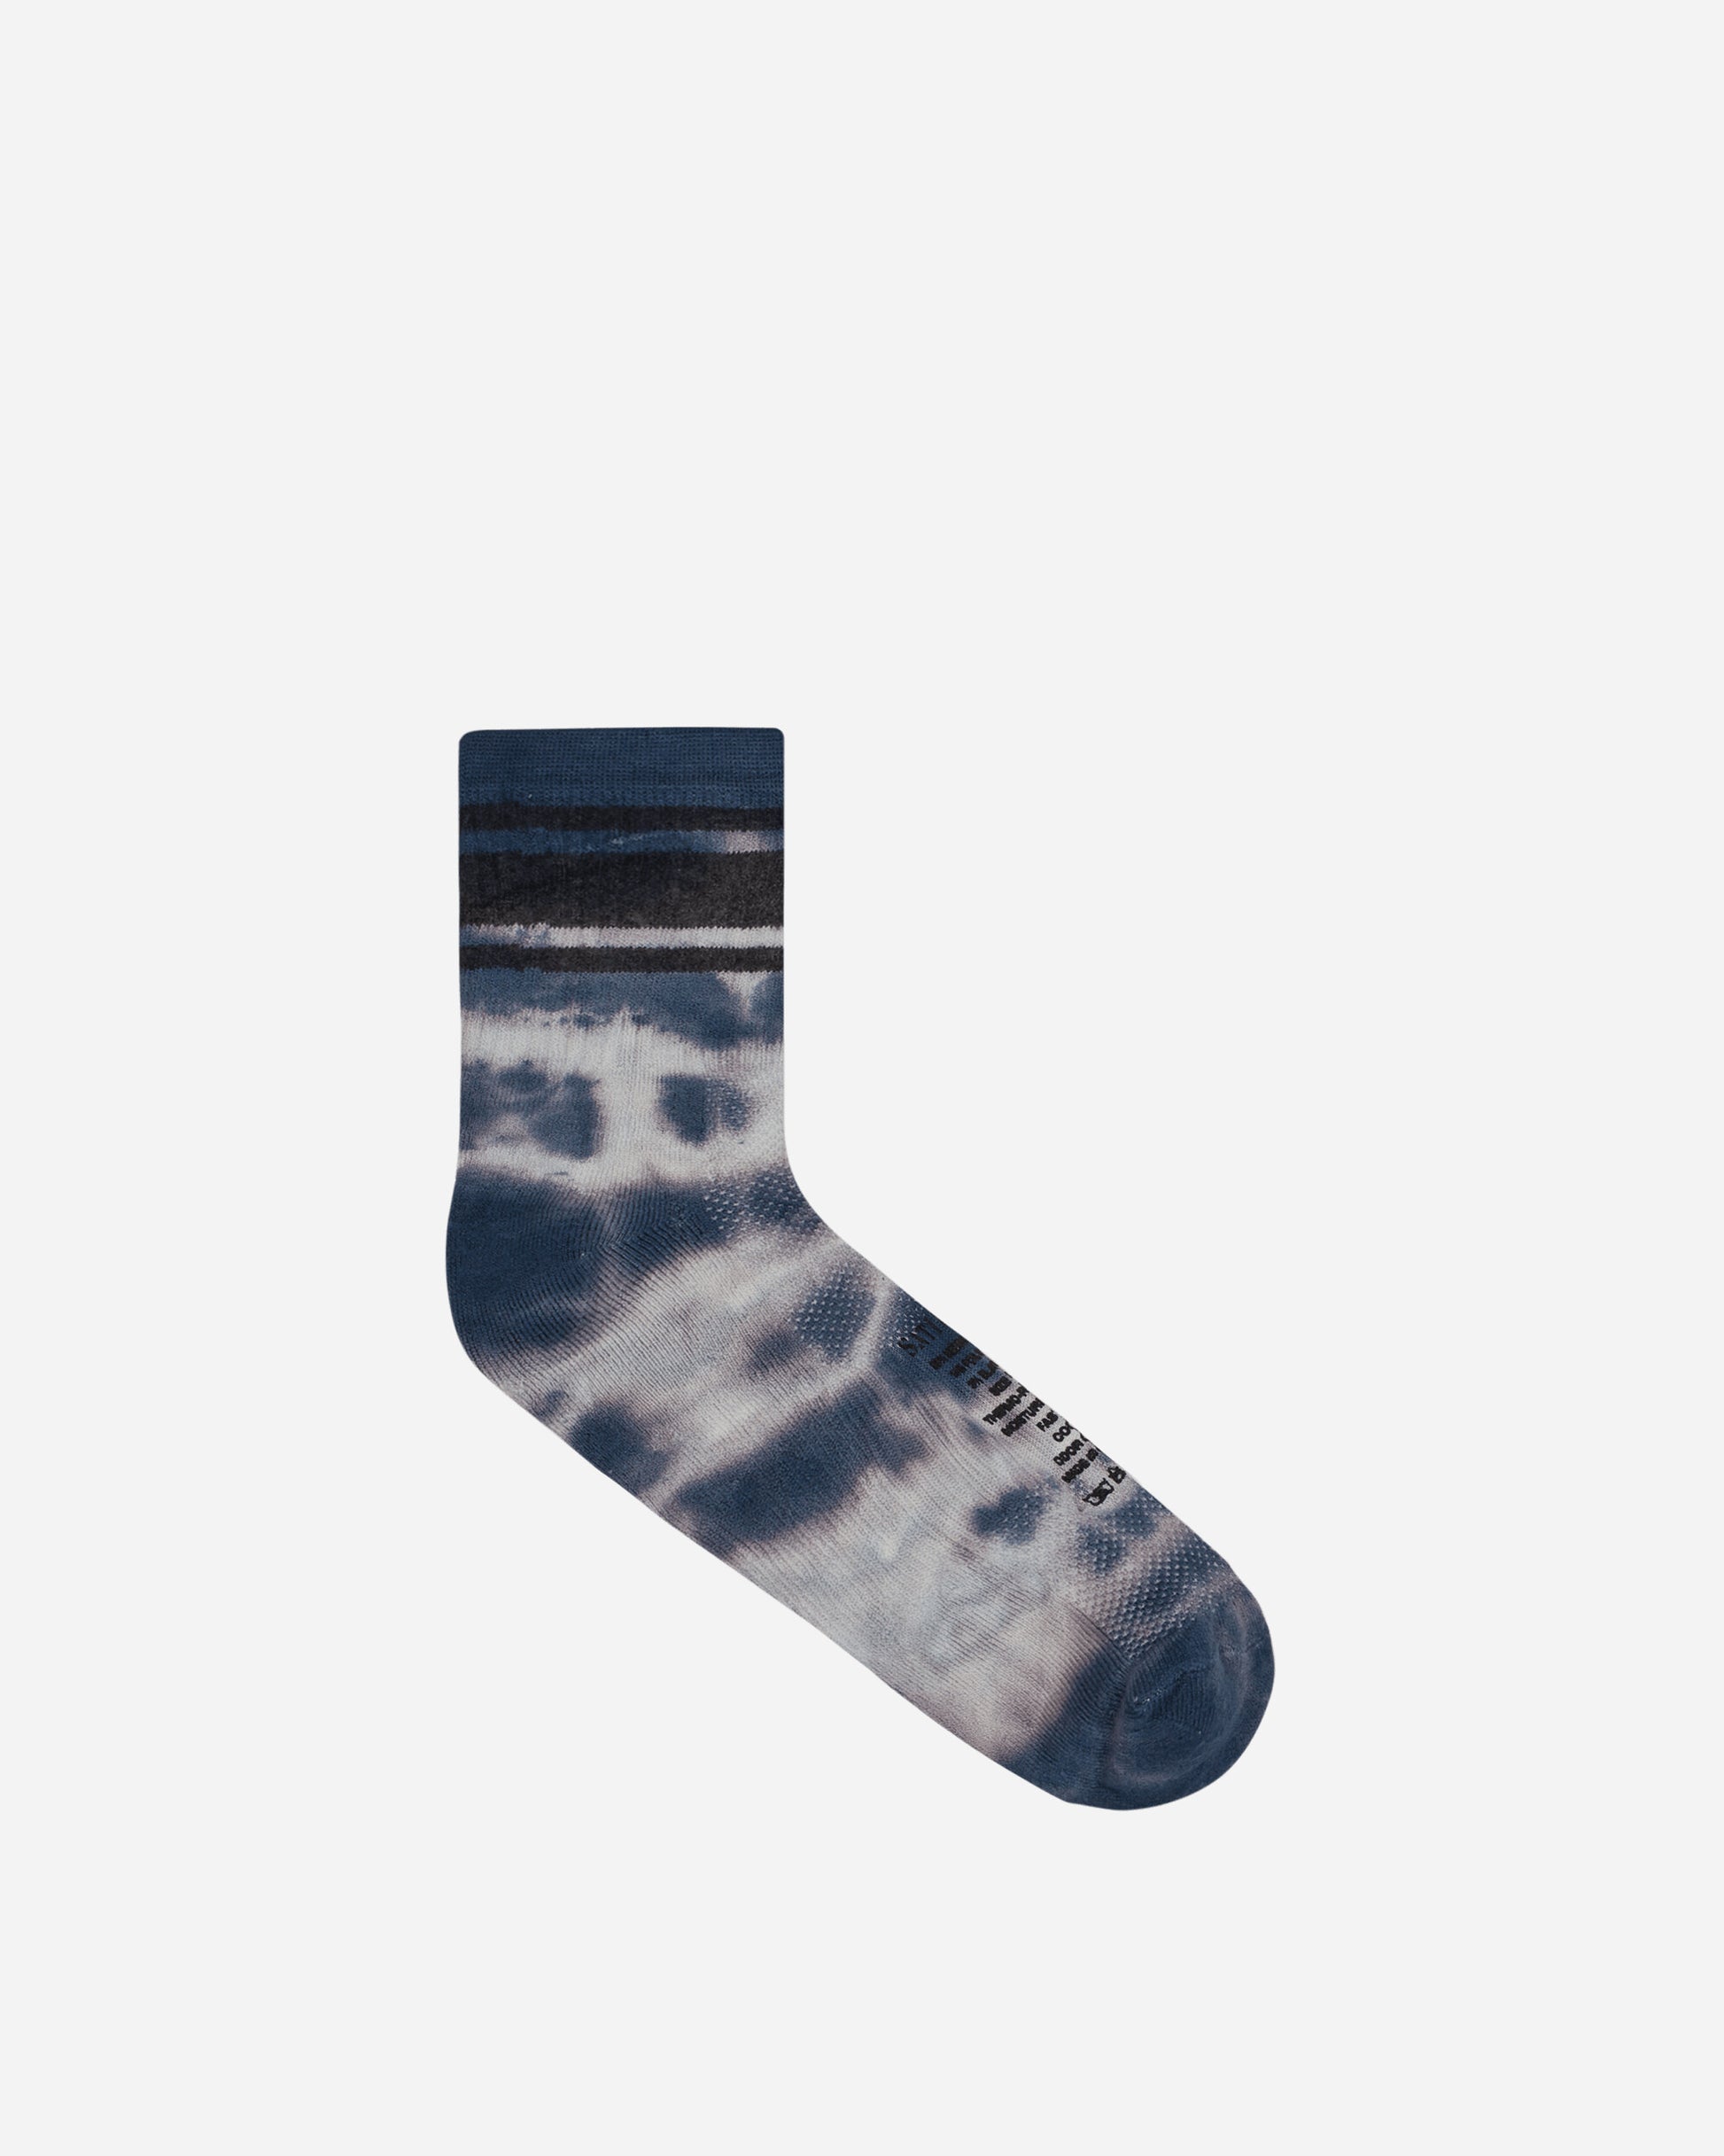 Satisfy Merino Tube Socks Ink Tie-Dye Underwear Socks 5110 IN